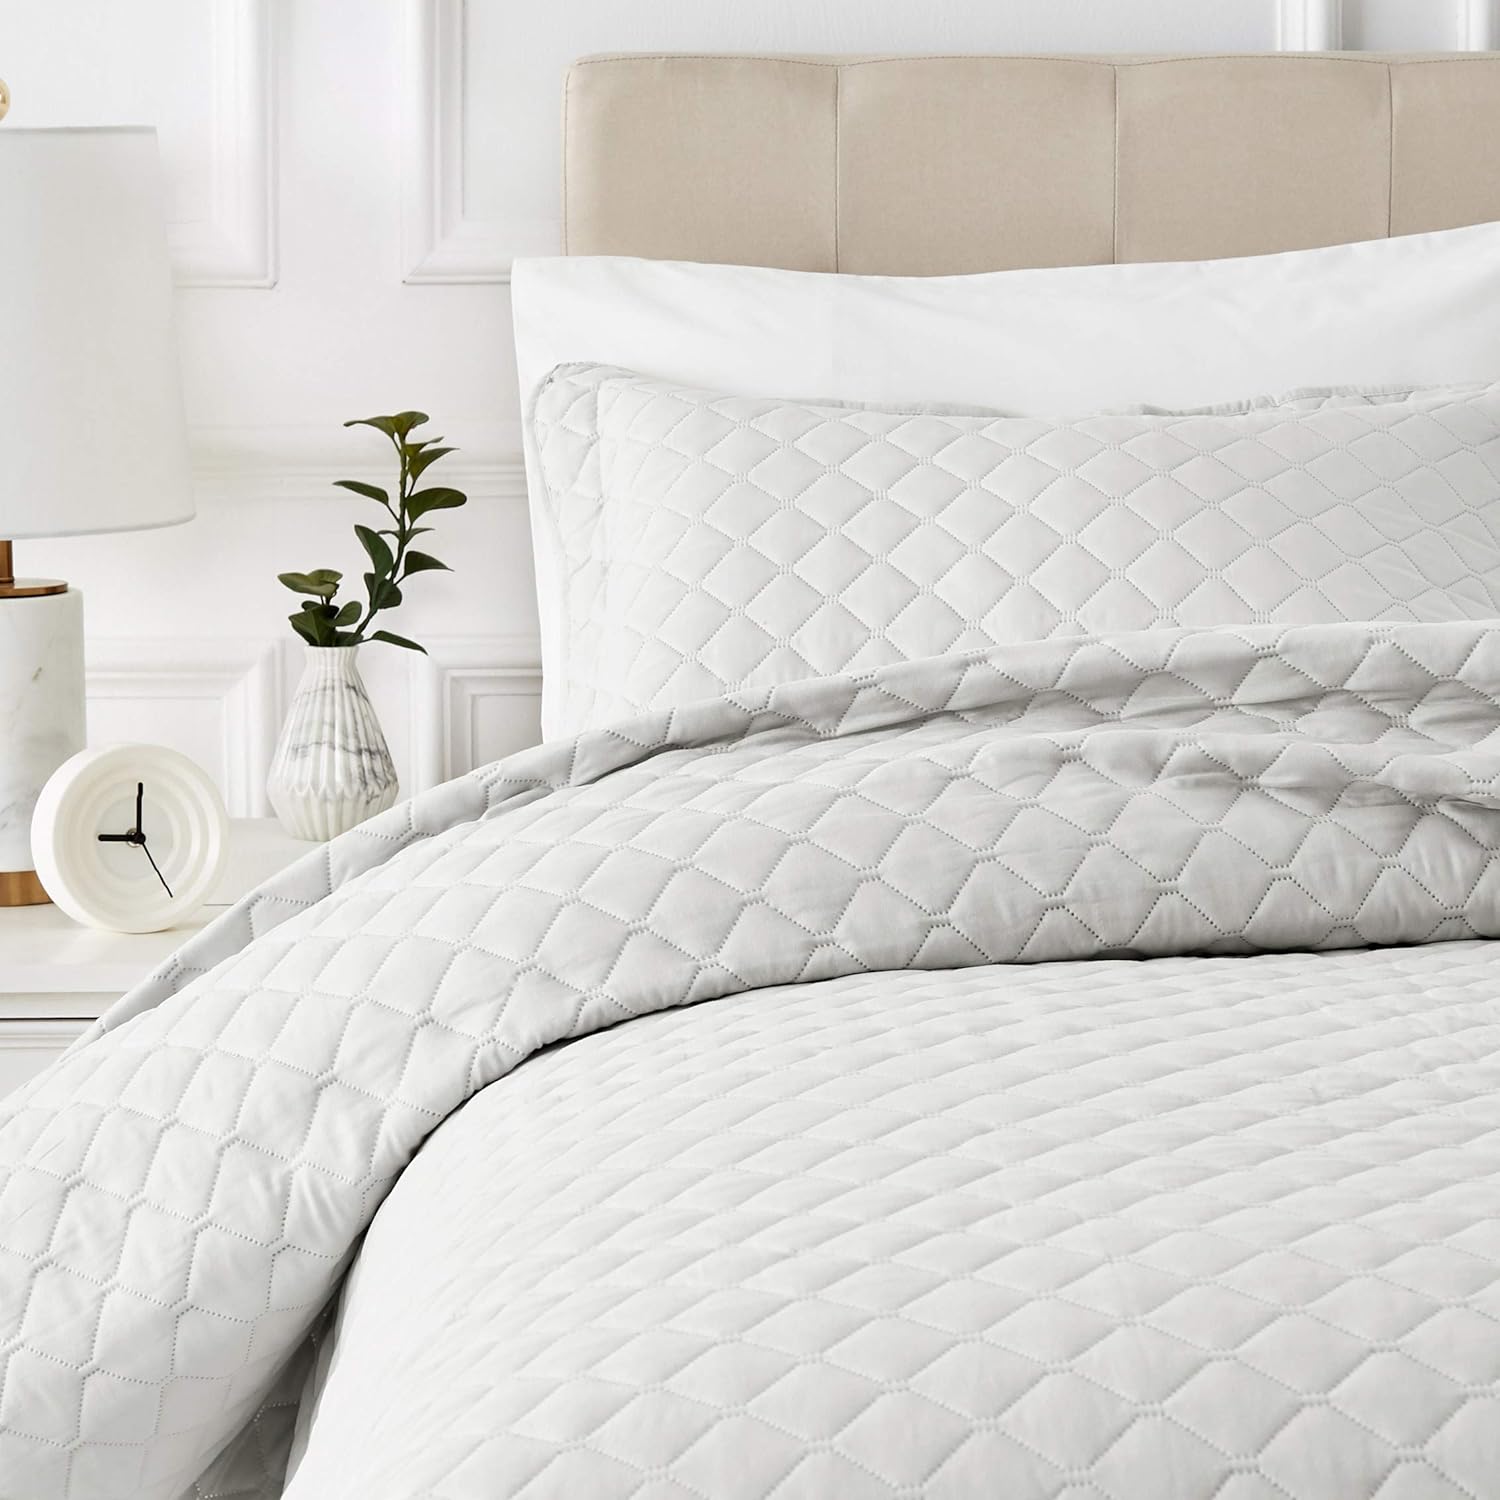 Amazon Basics Oversized Quilt Bed Set, Embossed Coverlet and Sham - Twin, Cream Diamond